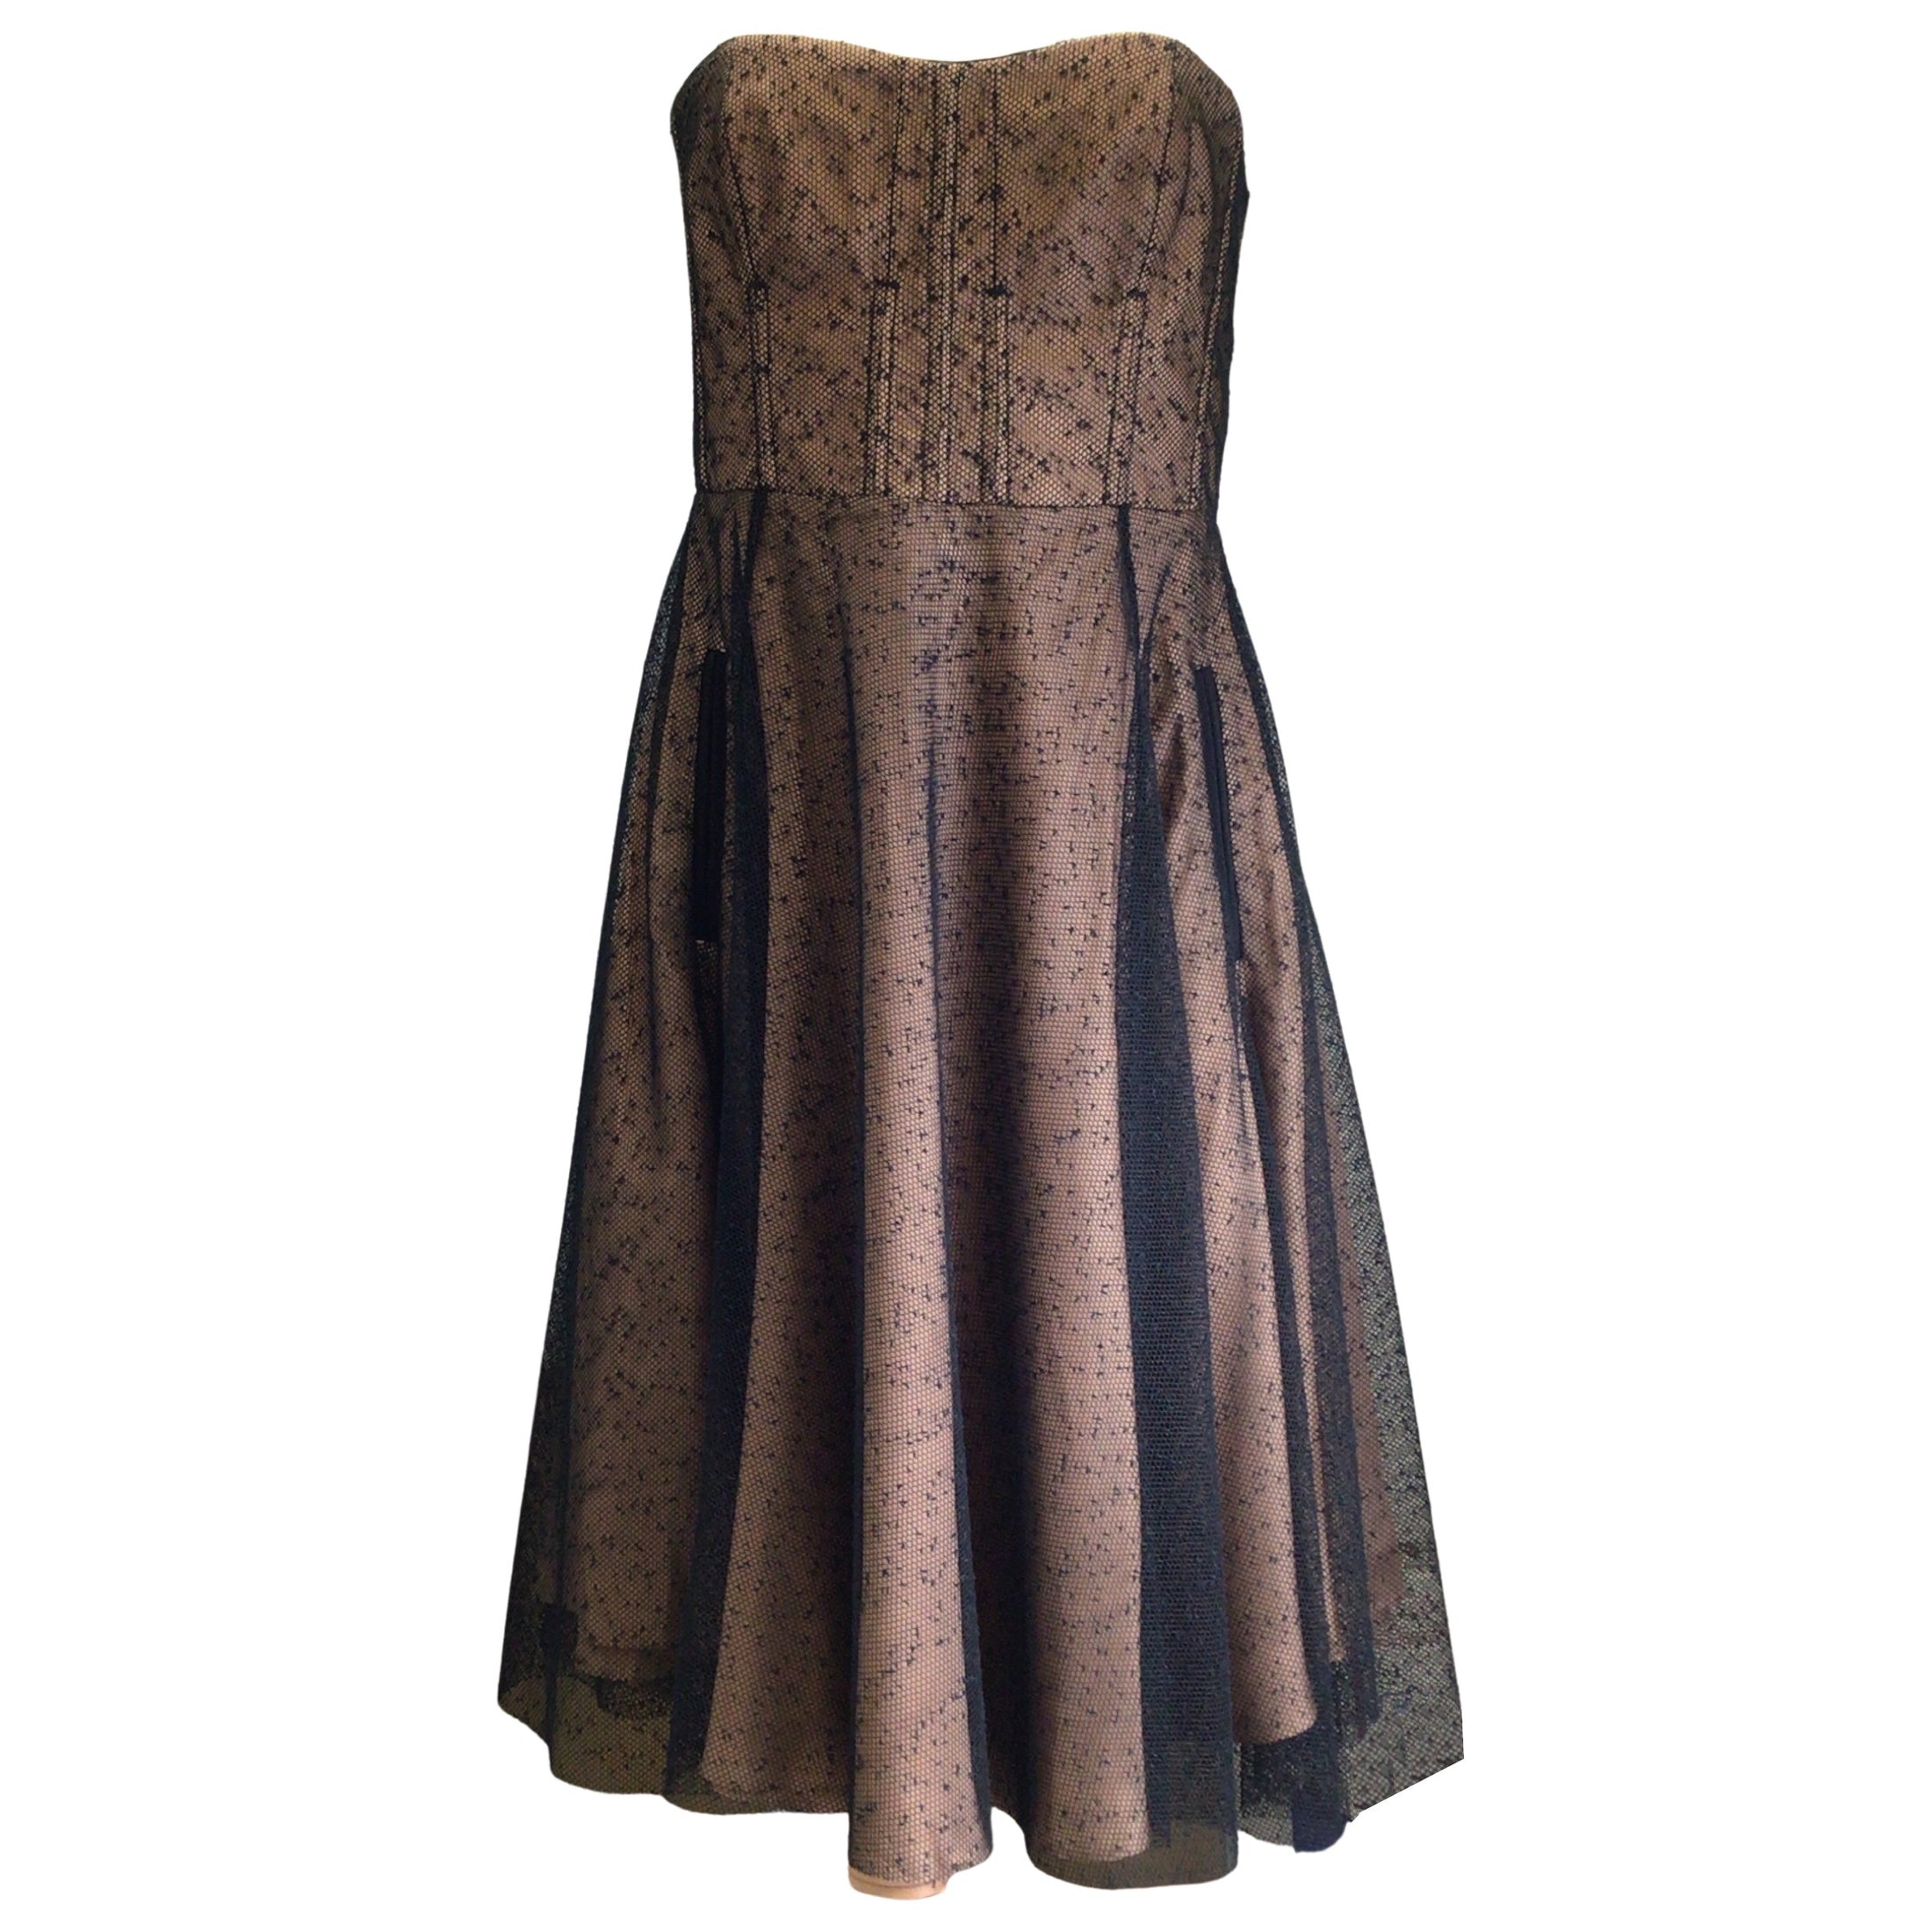 Carven Black / Beige Strapless Lace Dress